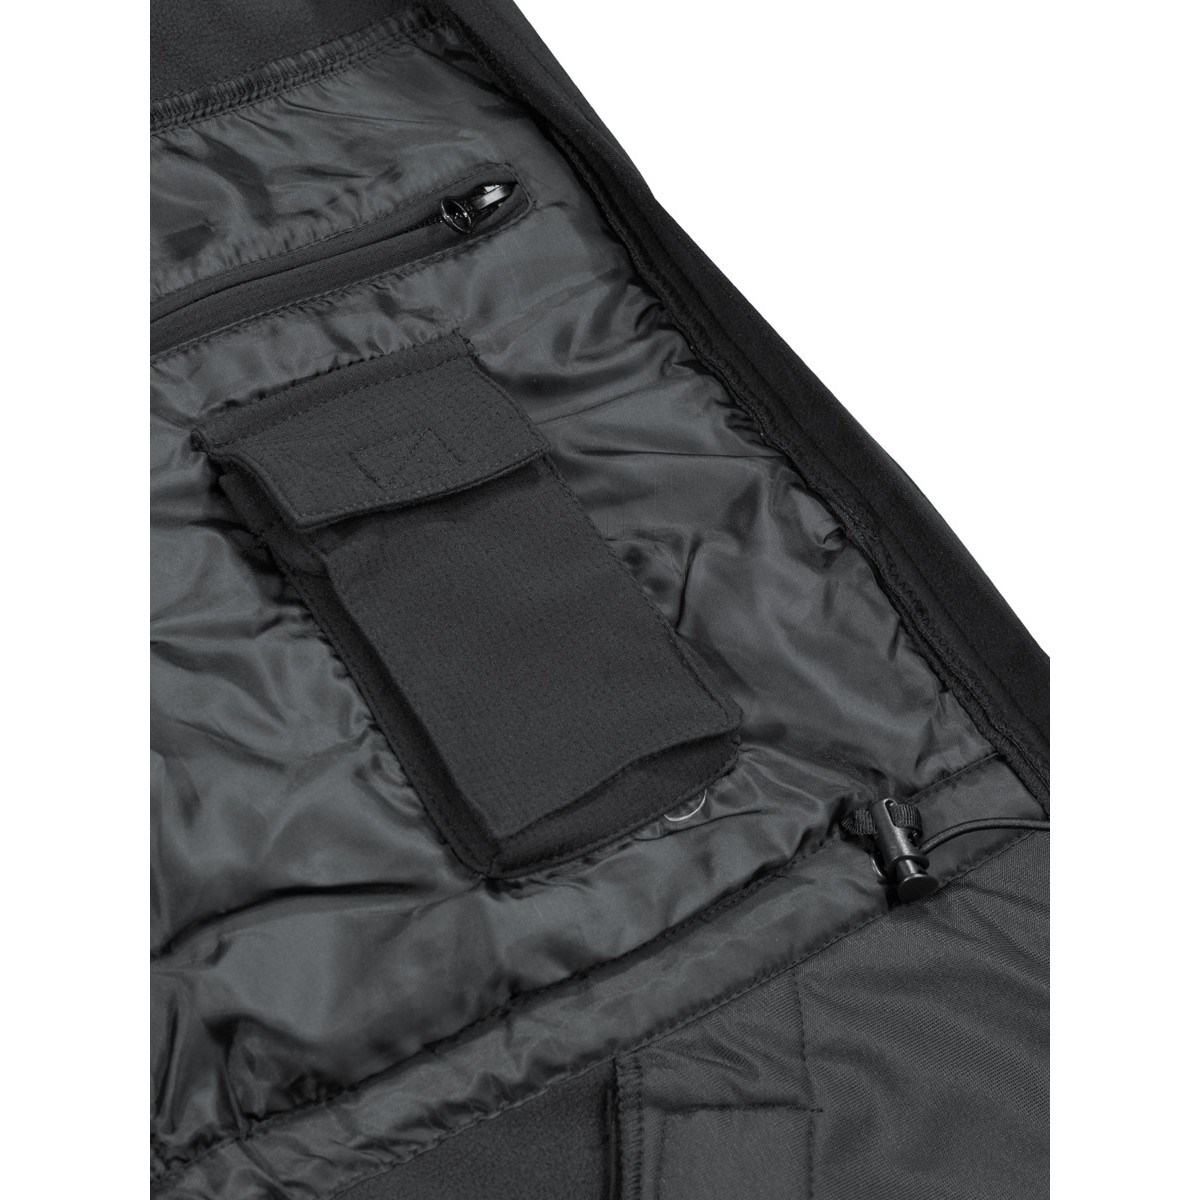 Jacket softshell HIGH DEFENCE BLACK MFH Defence 03411A L-11